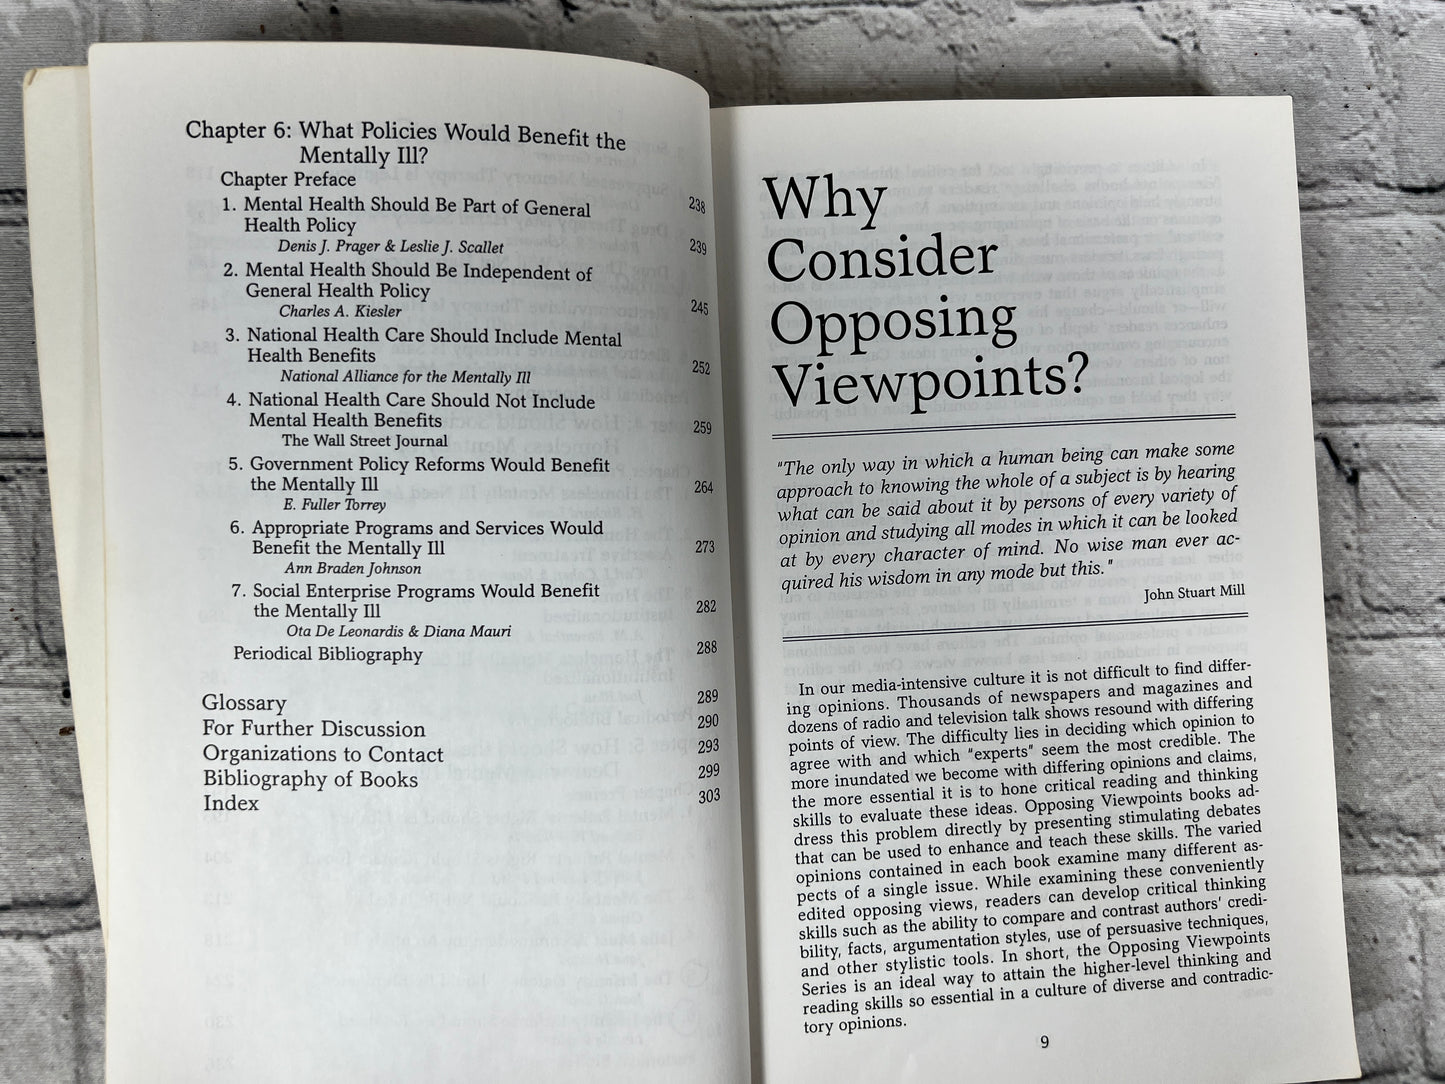 Mental Illness Opposing Viewpoints by David Bender & Bruno Leone [1995]